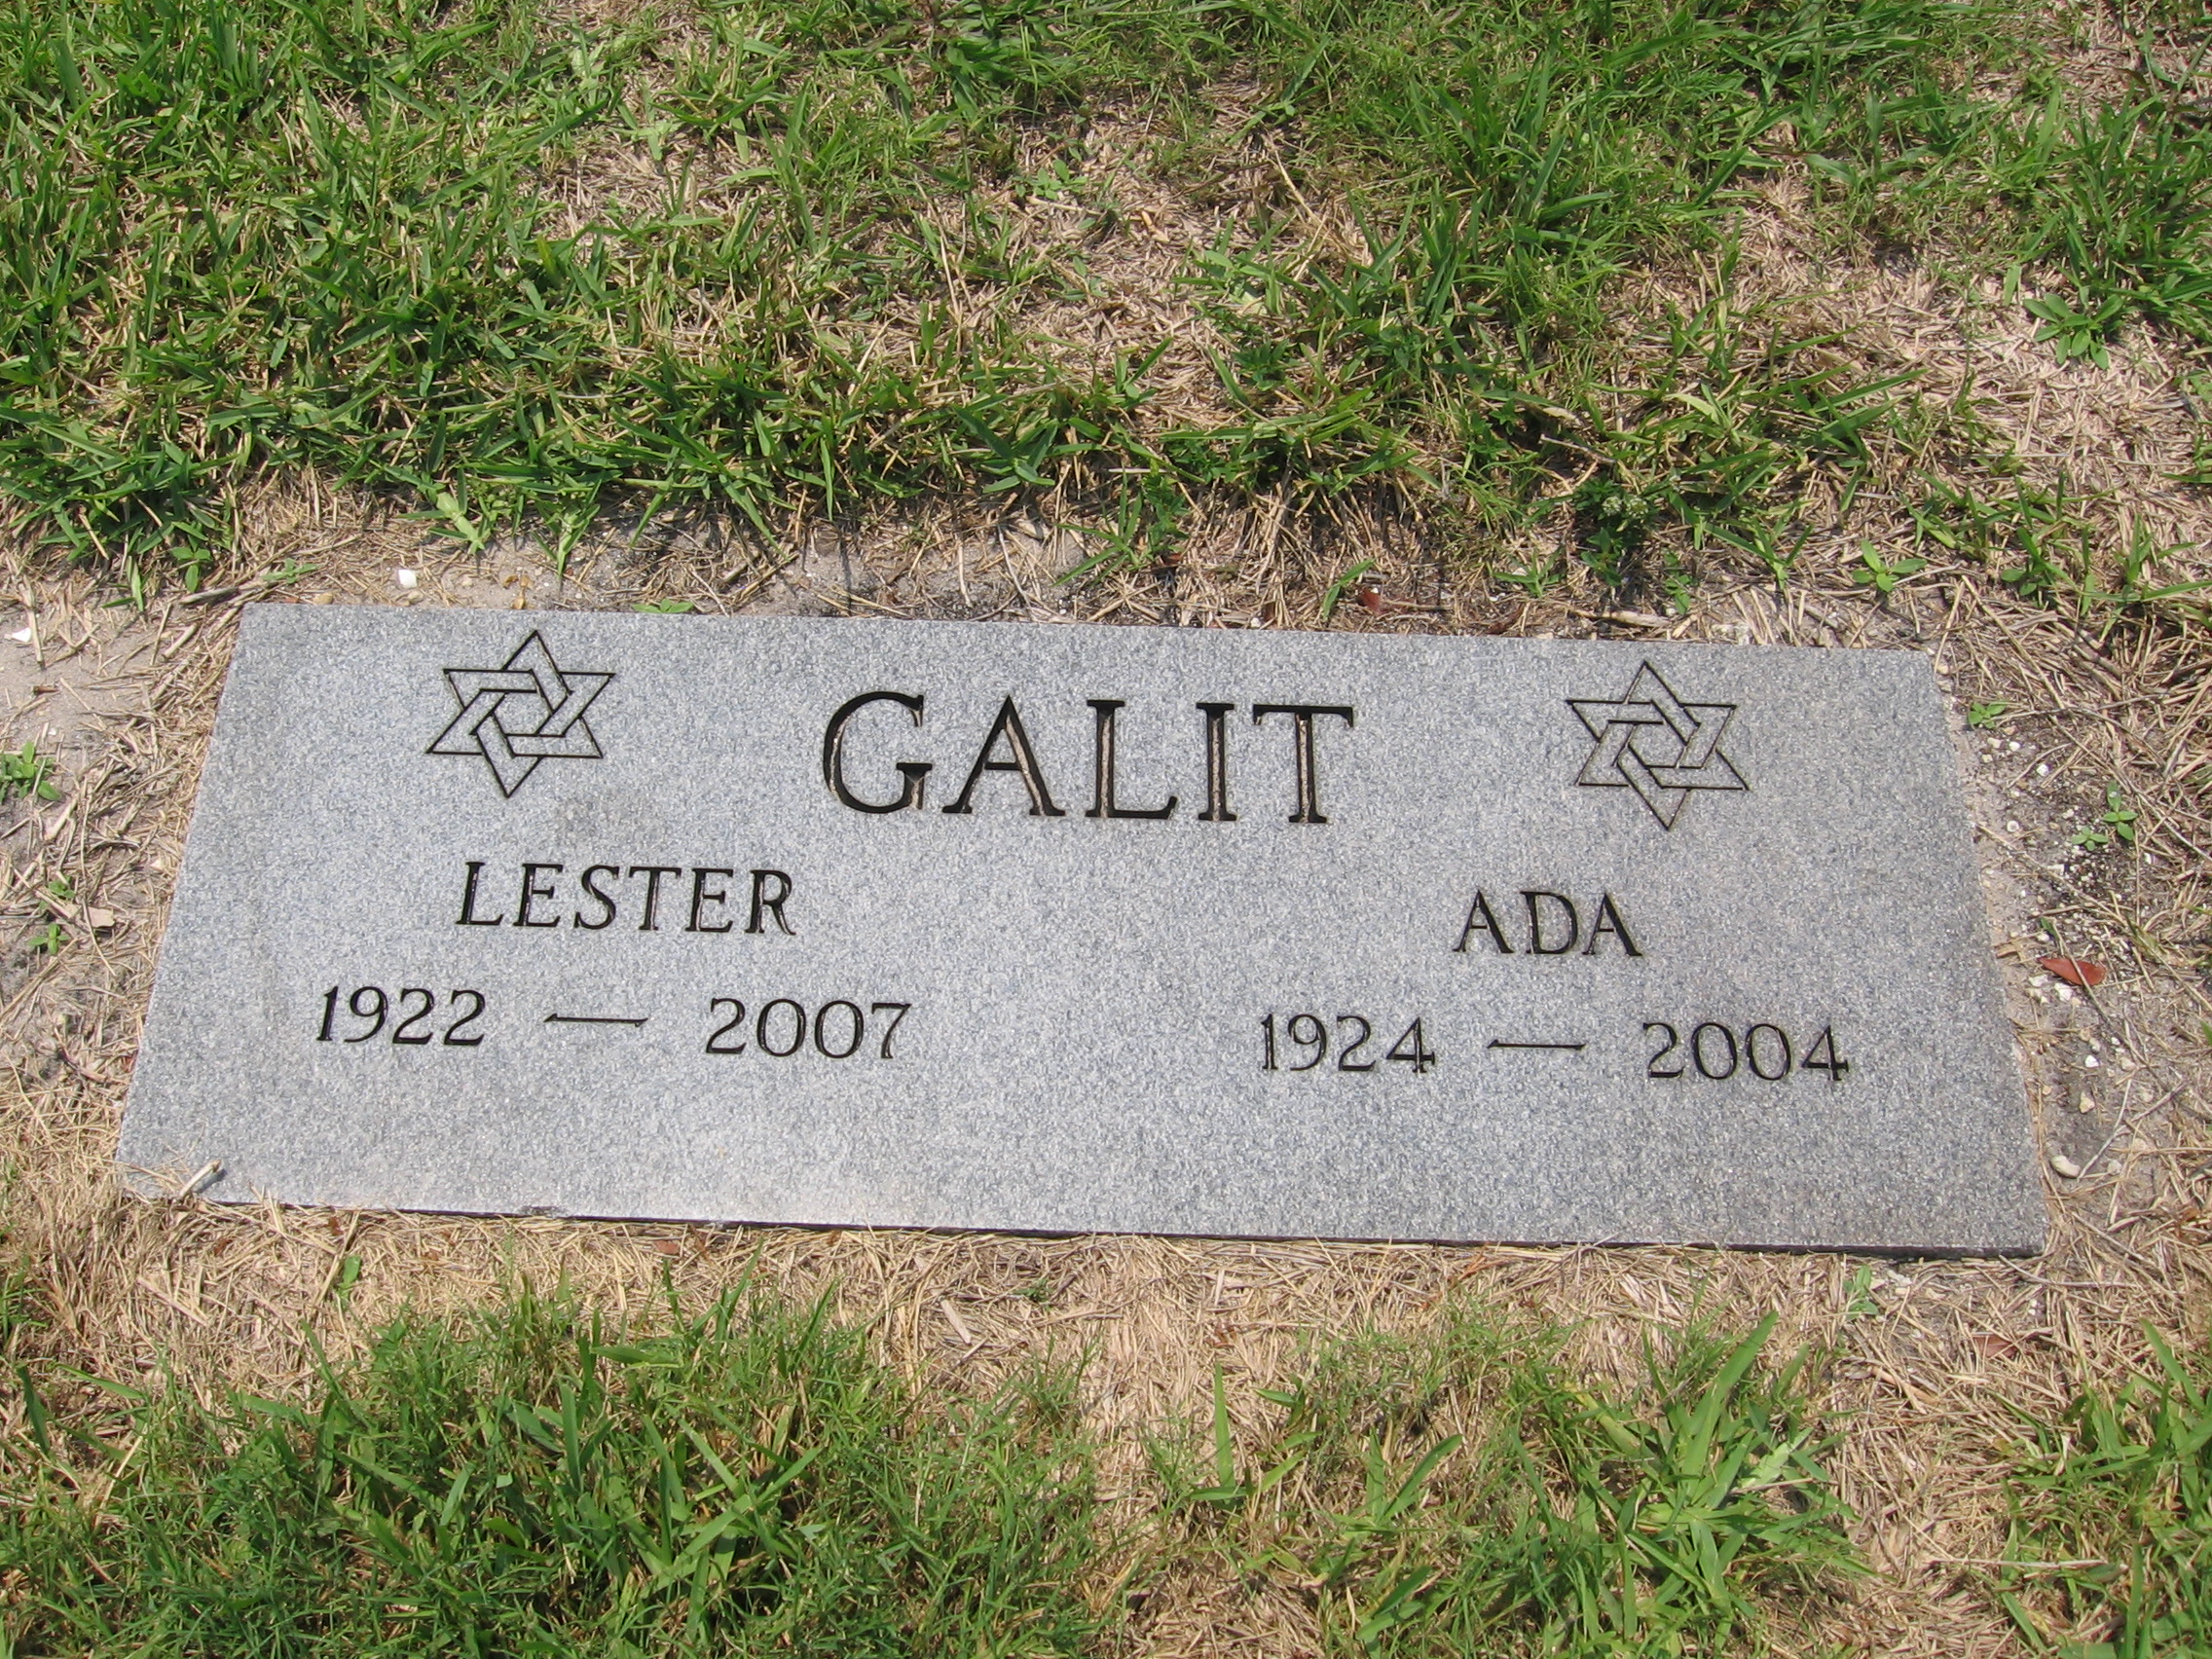 Lester Galit